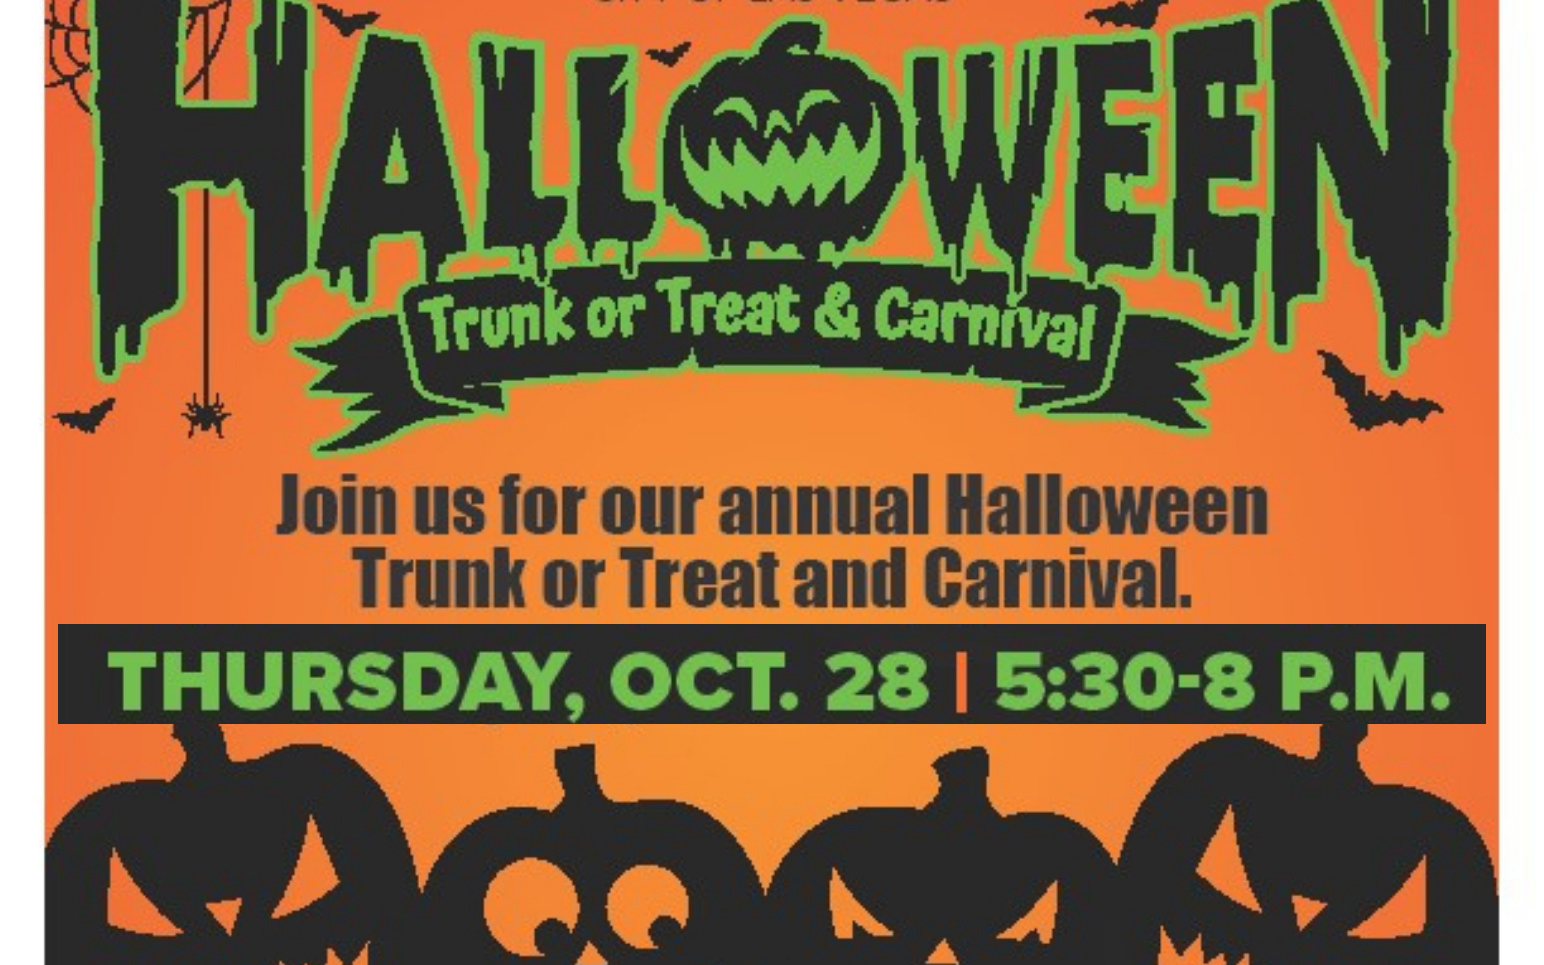 Halloween Trunk or Treat & Carnival